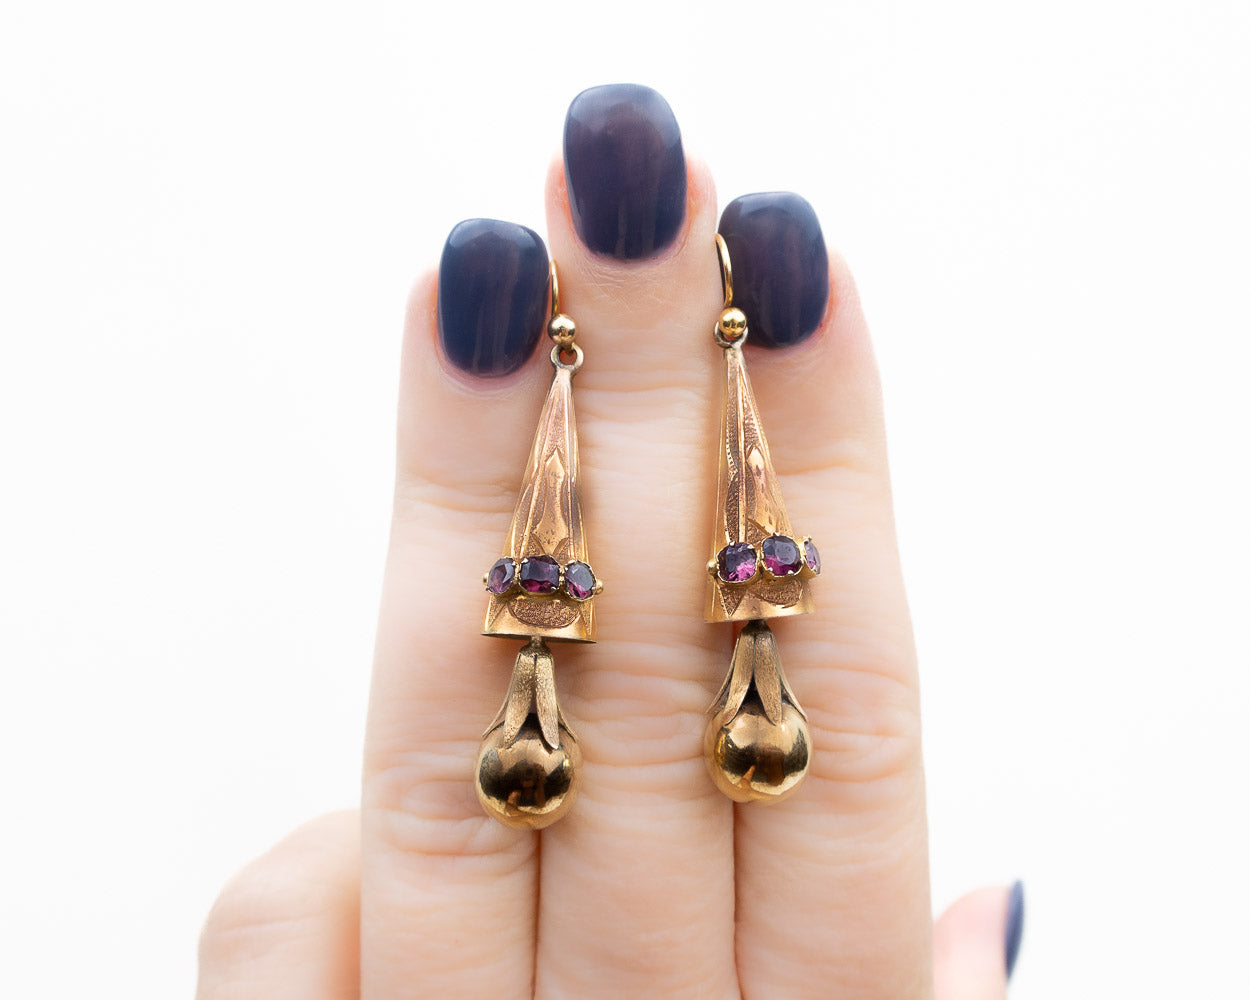 Victorian Dangle Earrings with Garnets